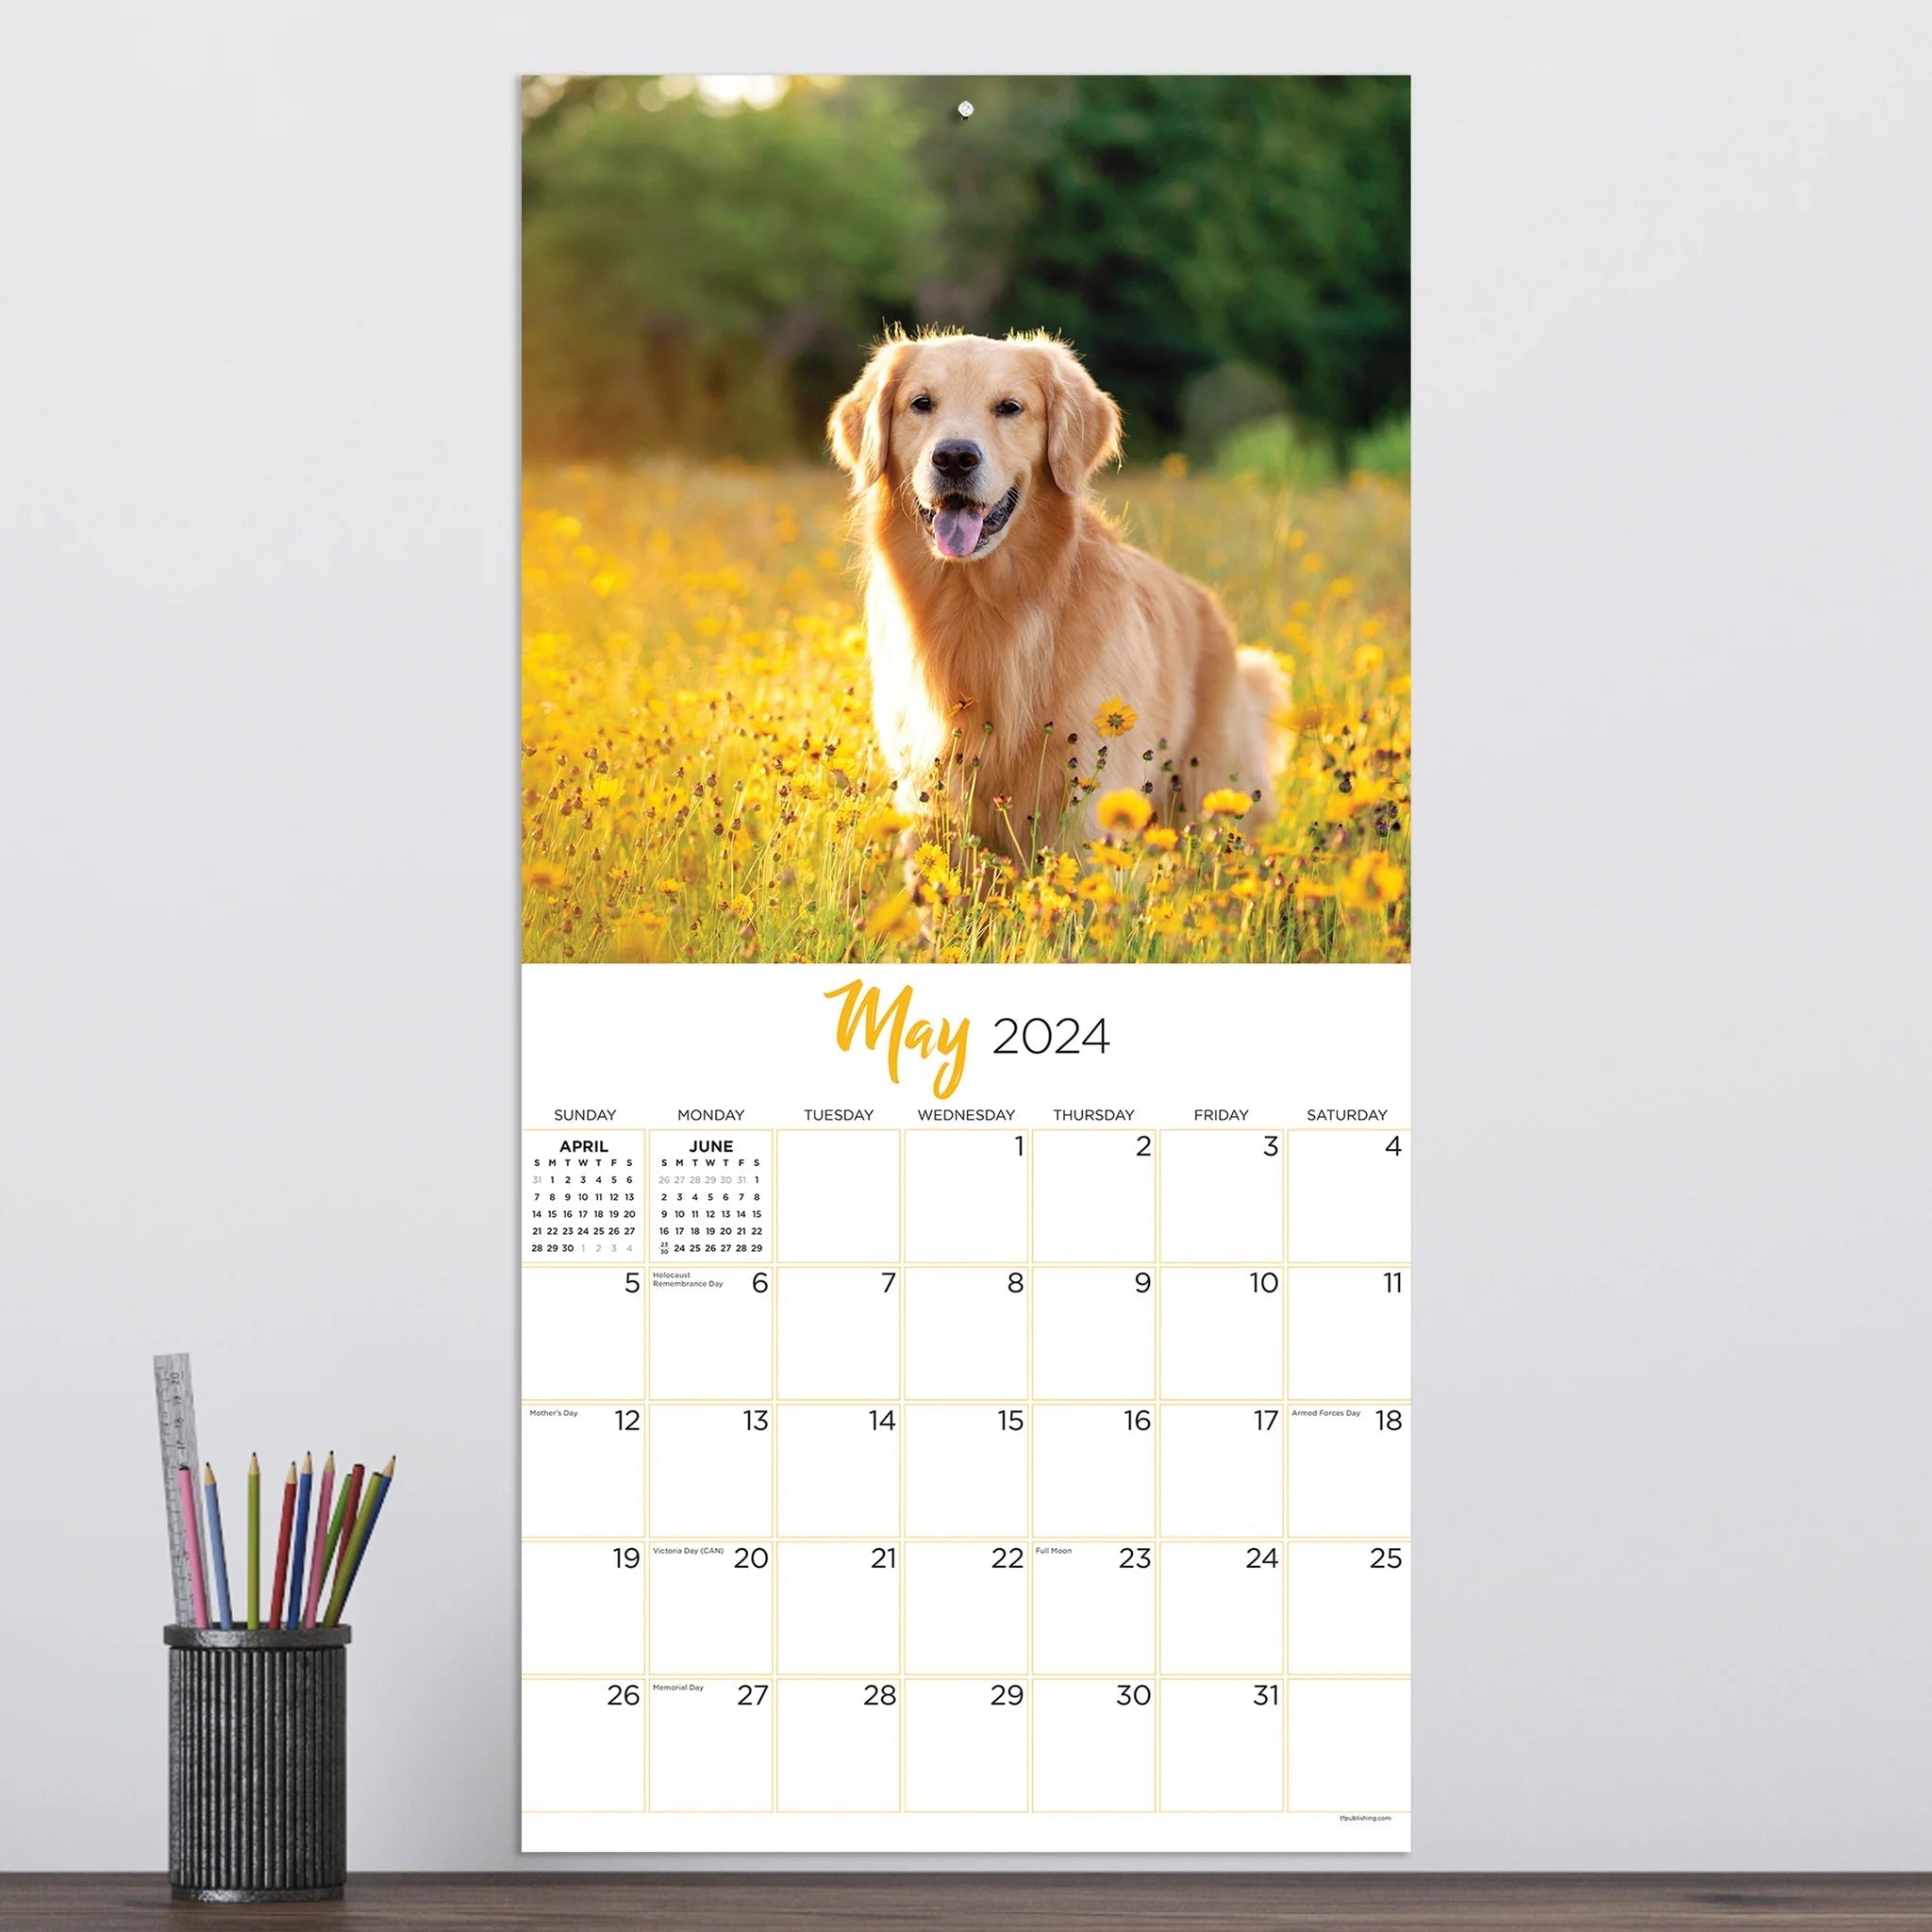 2024 Golden Retrievers (by TF Publishing) - Square Wall Calendar